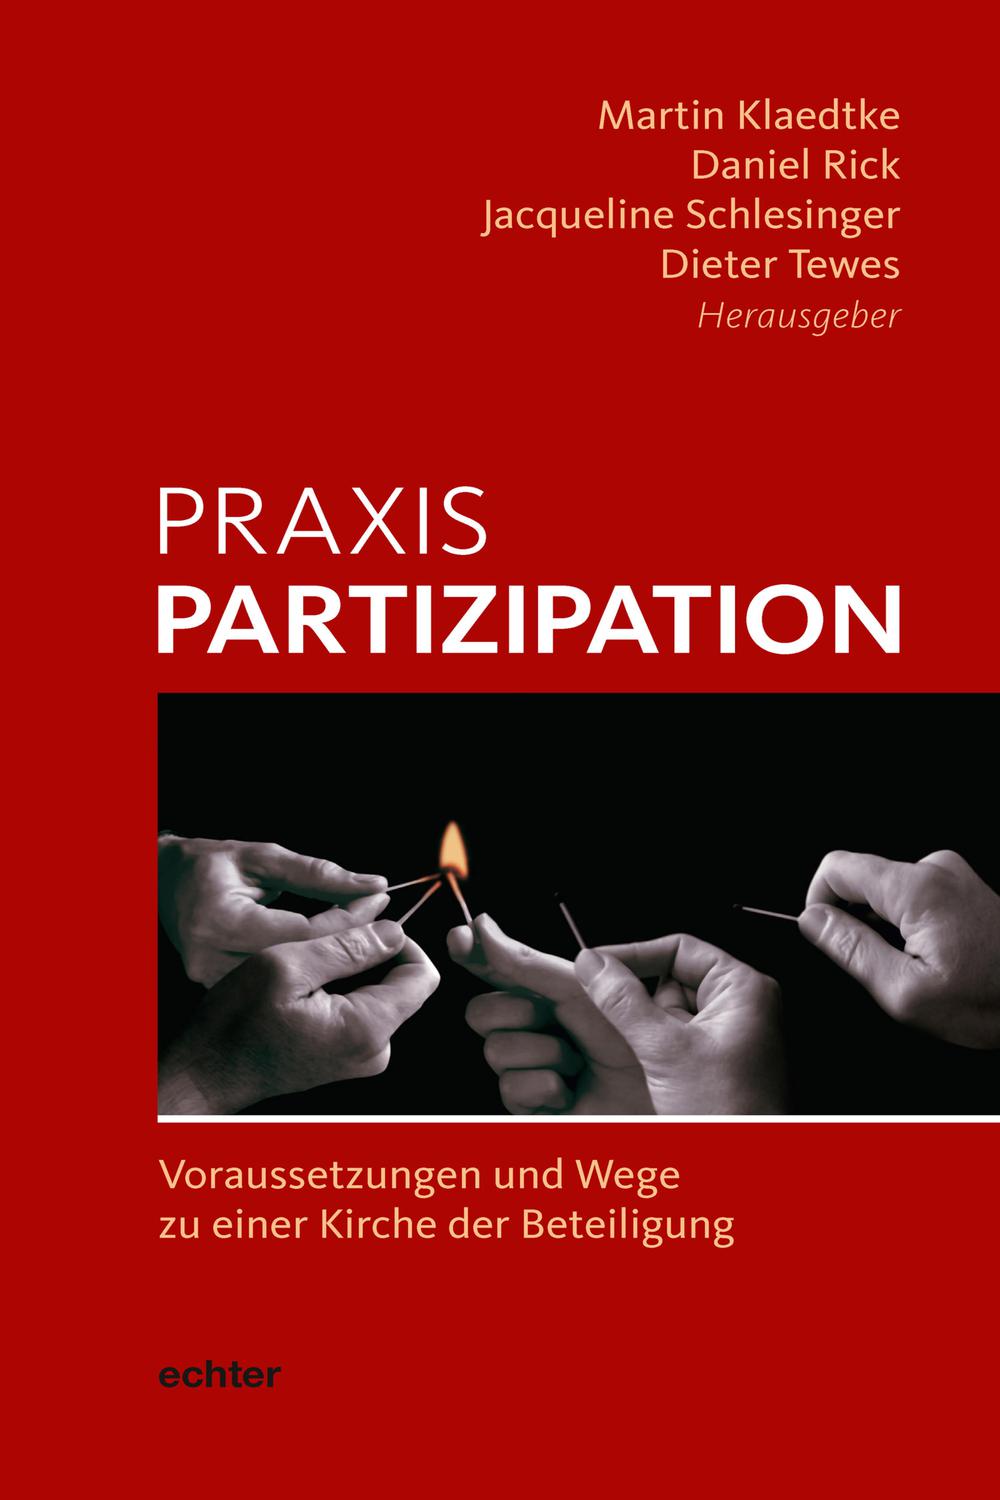 Praxis Partizipation - Martin Klaedtke, Daniel Rick, Jacqueline Schlesinger, Dieter Tewes